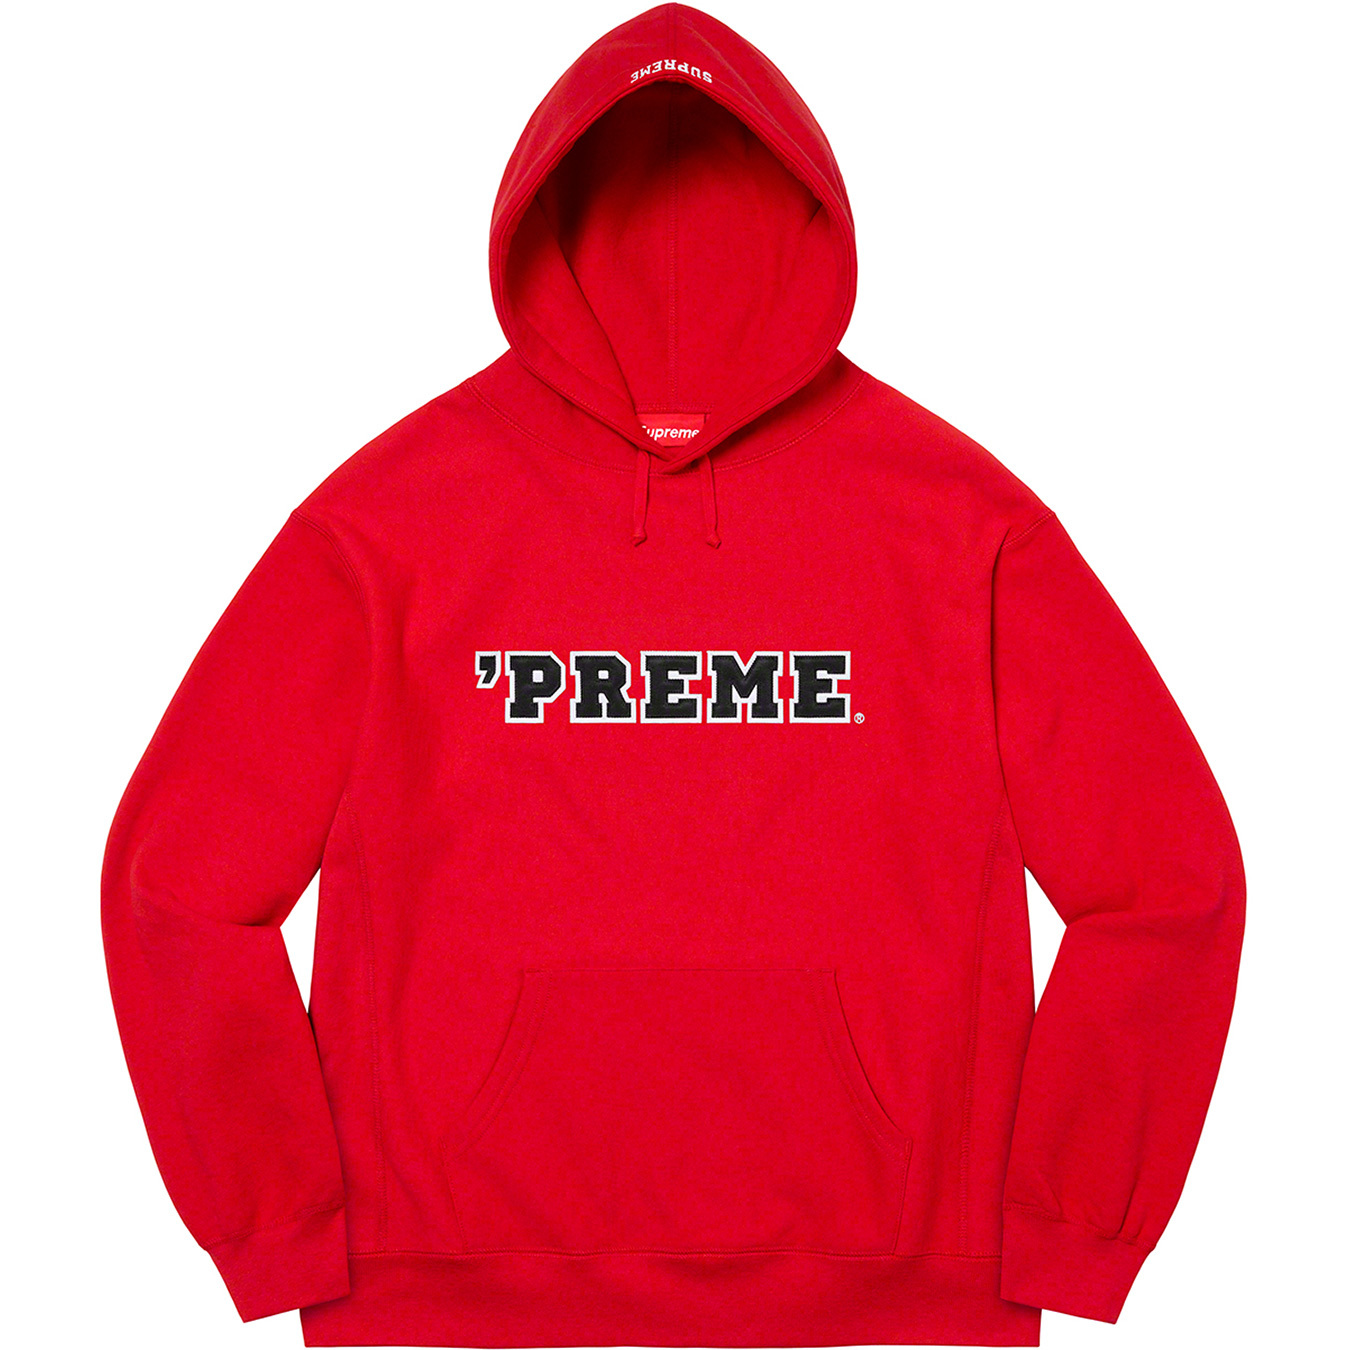 Supreme 'Preme Hooded Sweatshirt